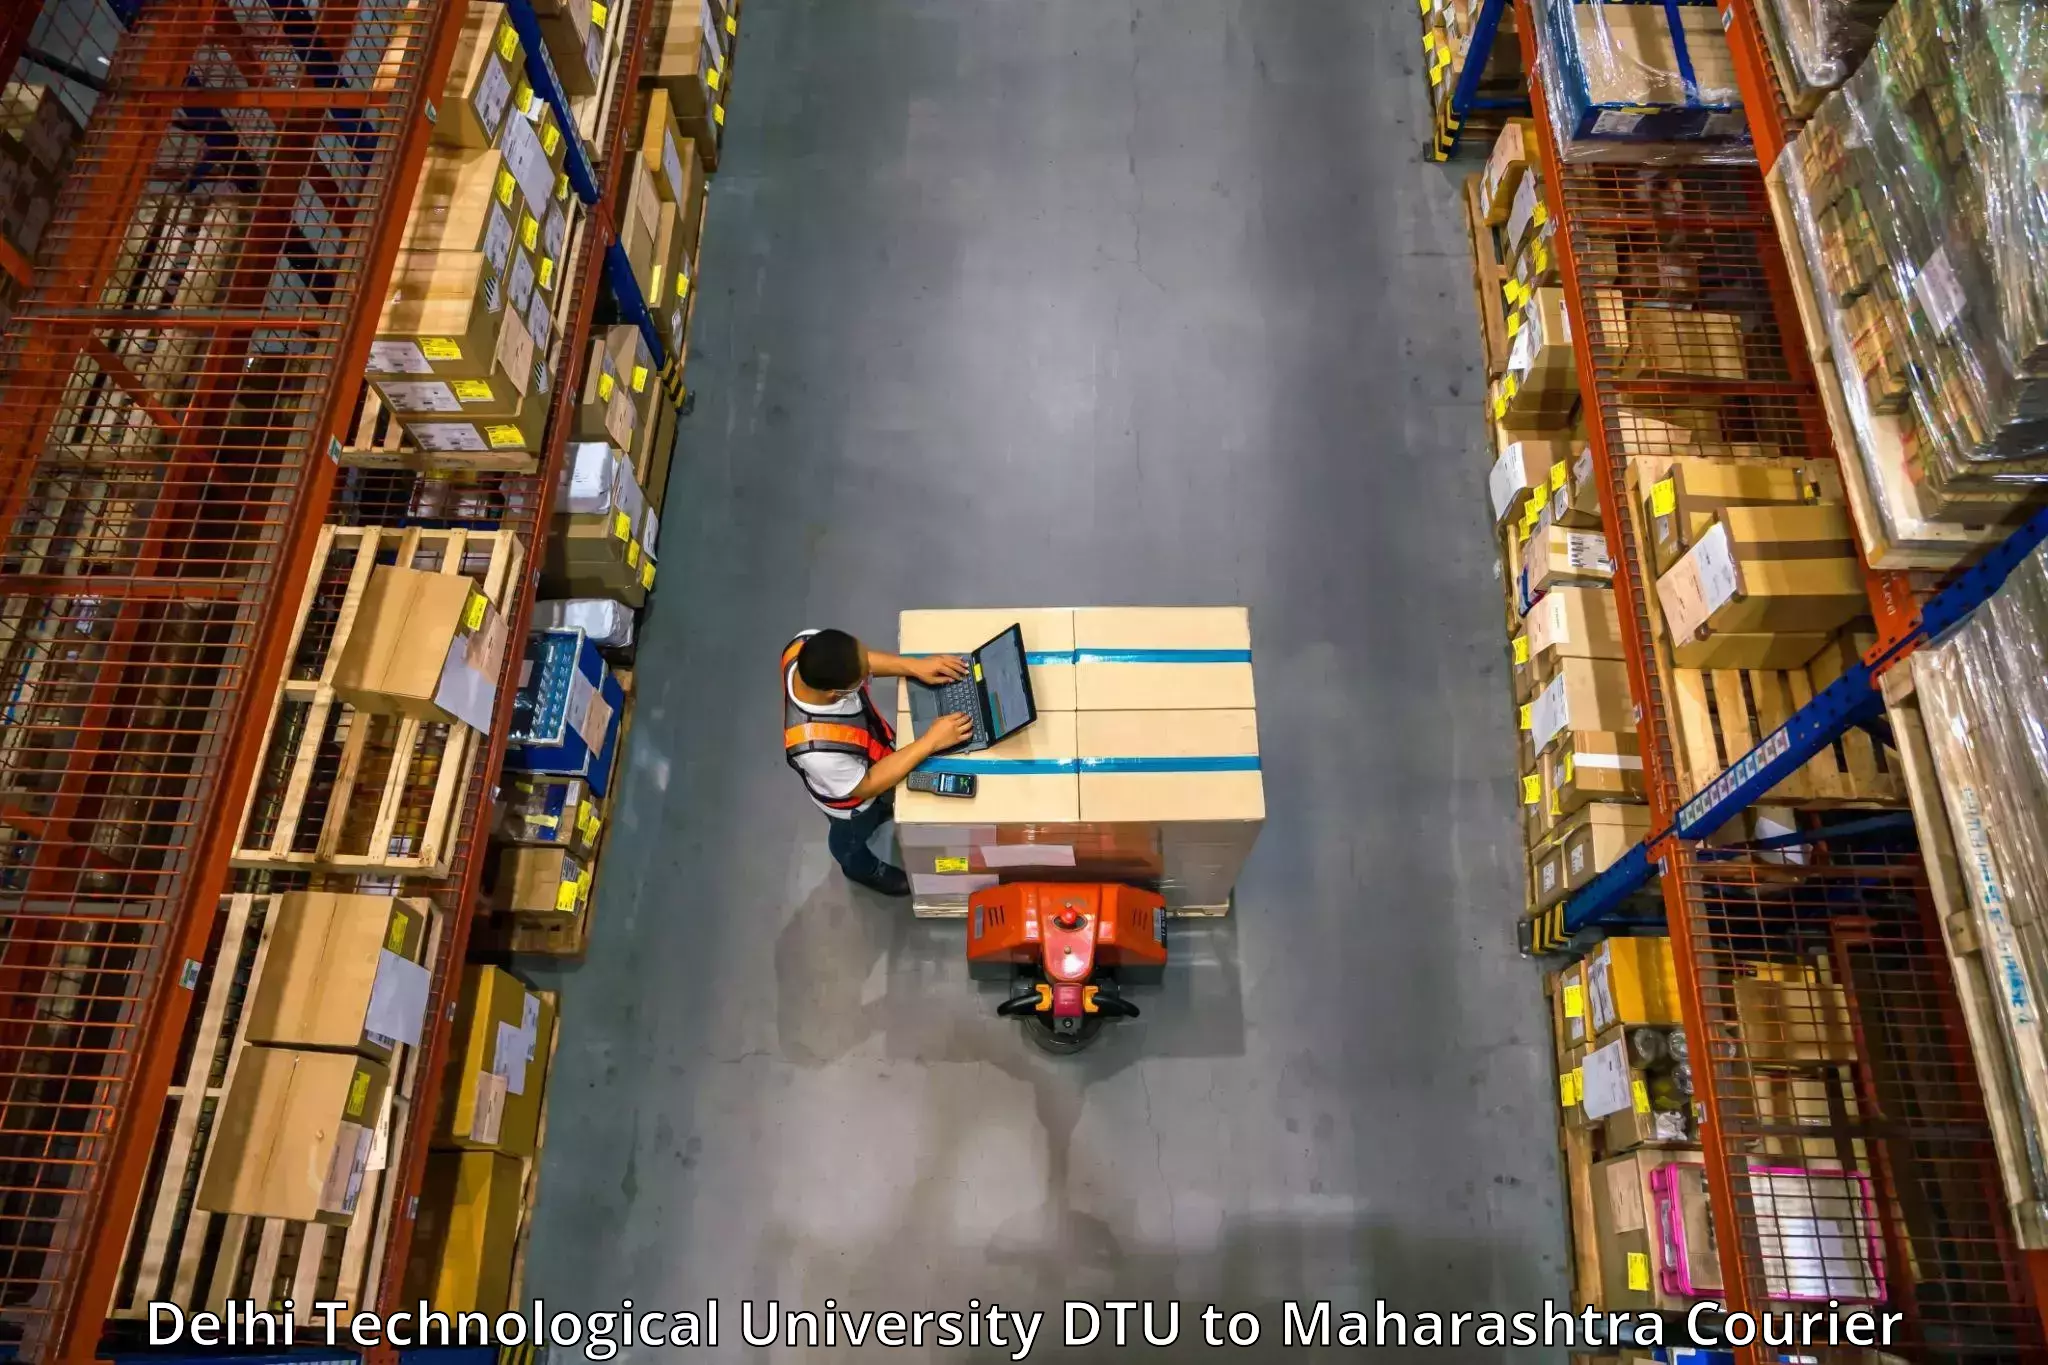 Expert packing and moving Delhi Technological University DTU to Shivajinagar